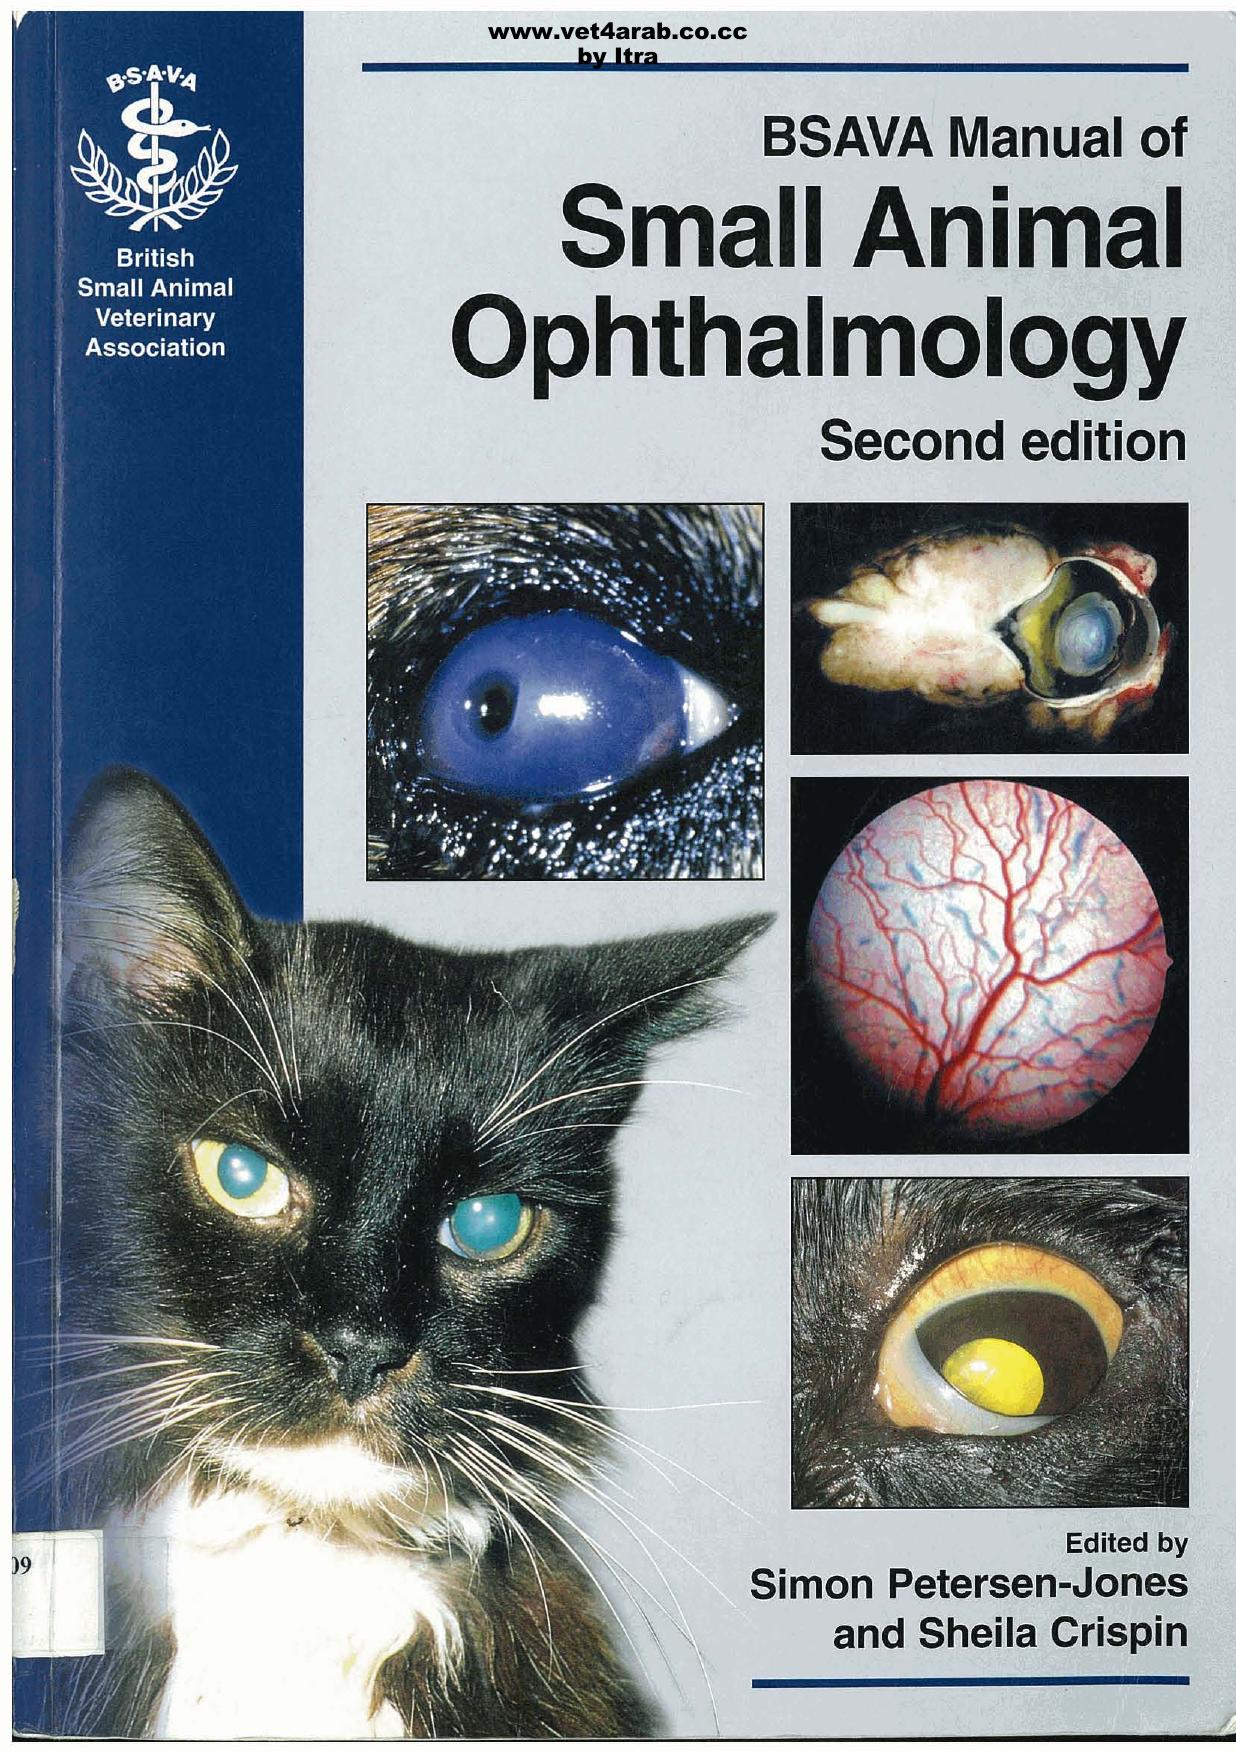 BSAVA Manual of Small Animal Ophthalmology, 2nd Edition 2002